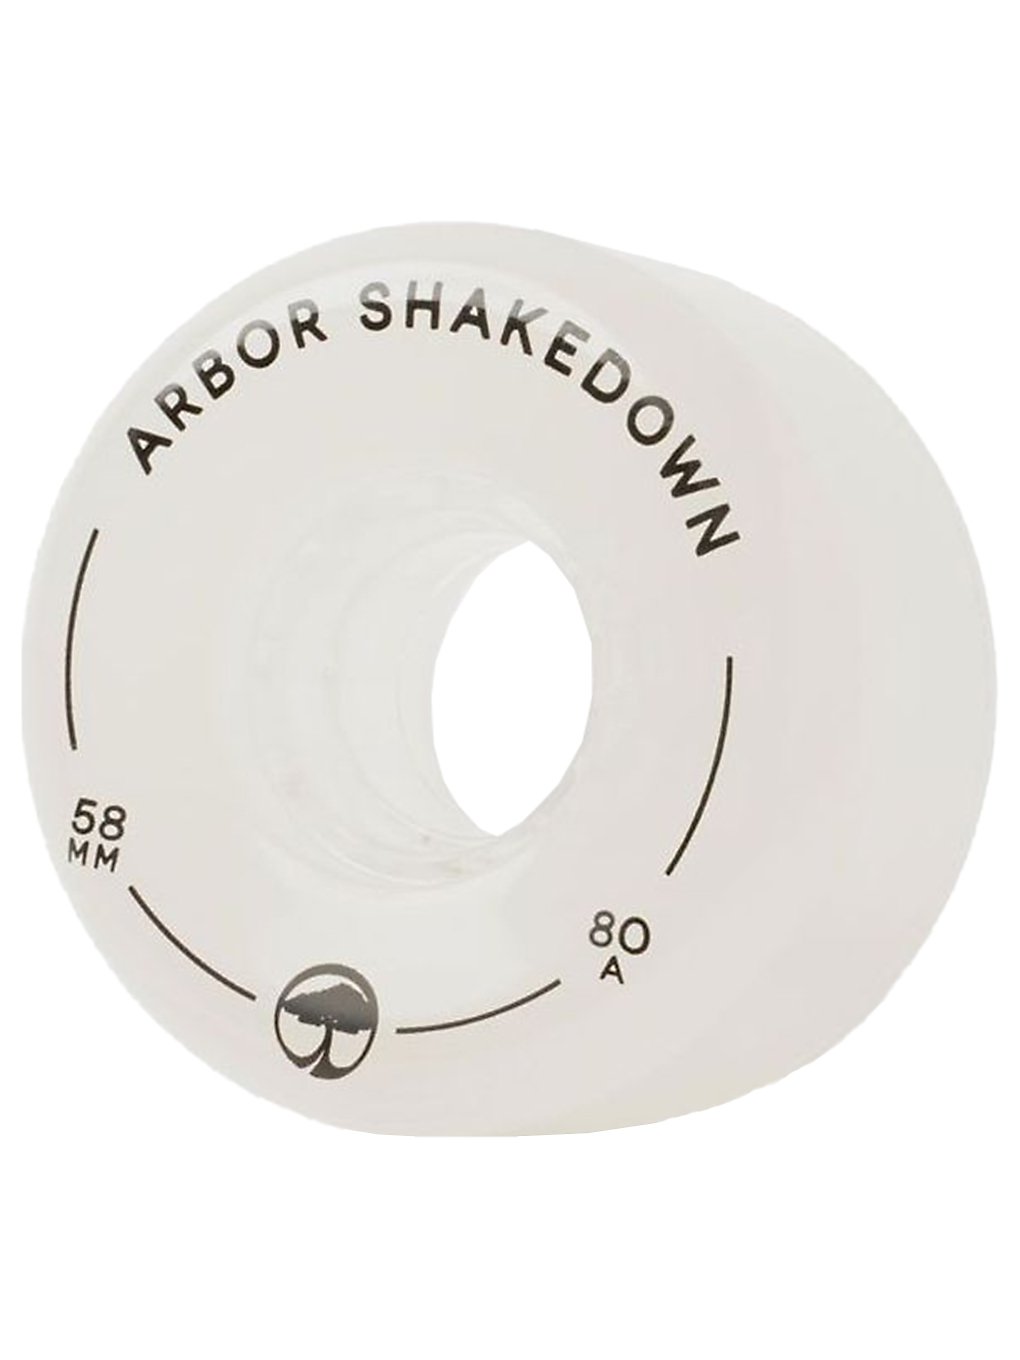 Arbor Shakedown 80a 58mm Wheels ghost white kaufen